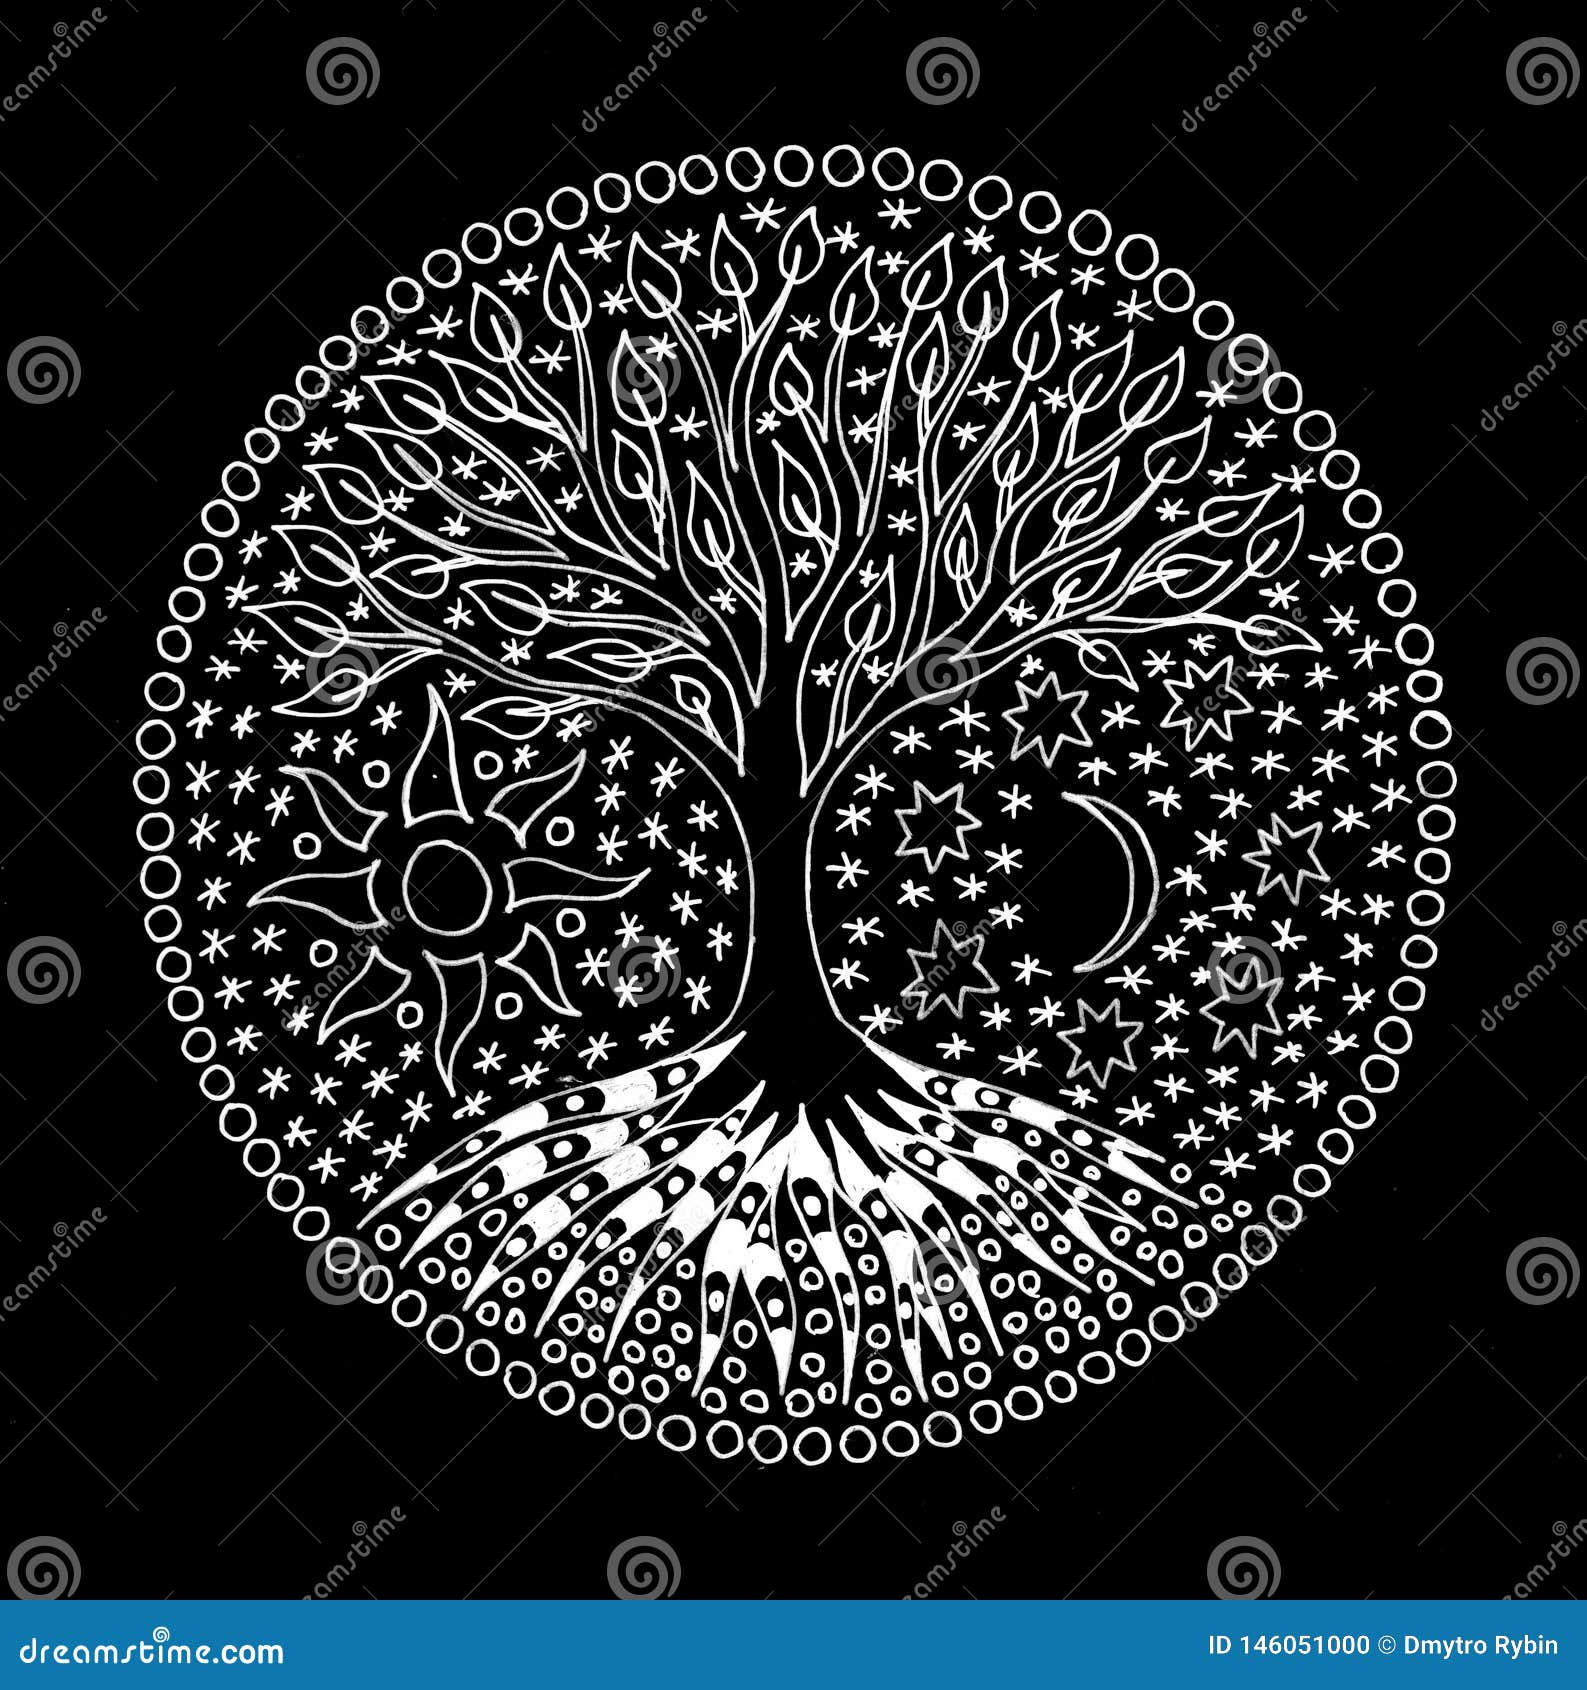 Download Tree Of Life Mandala Layered Svg Free - Free Layered SVG Files